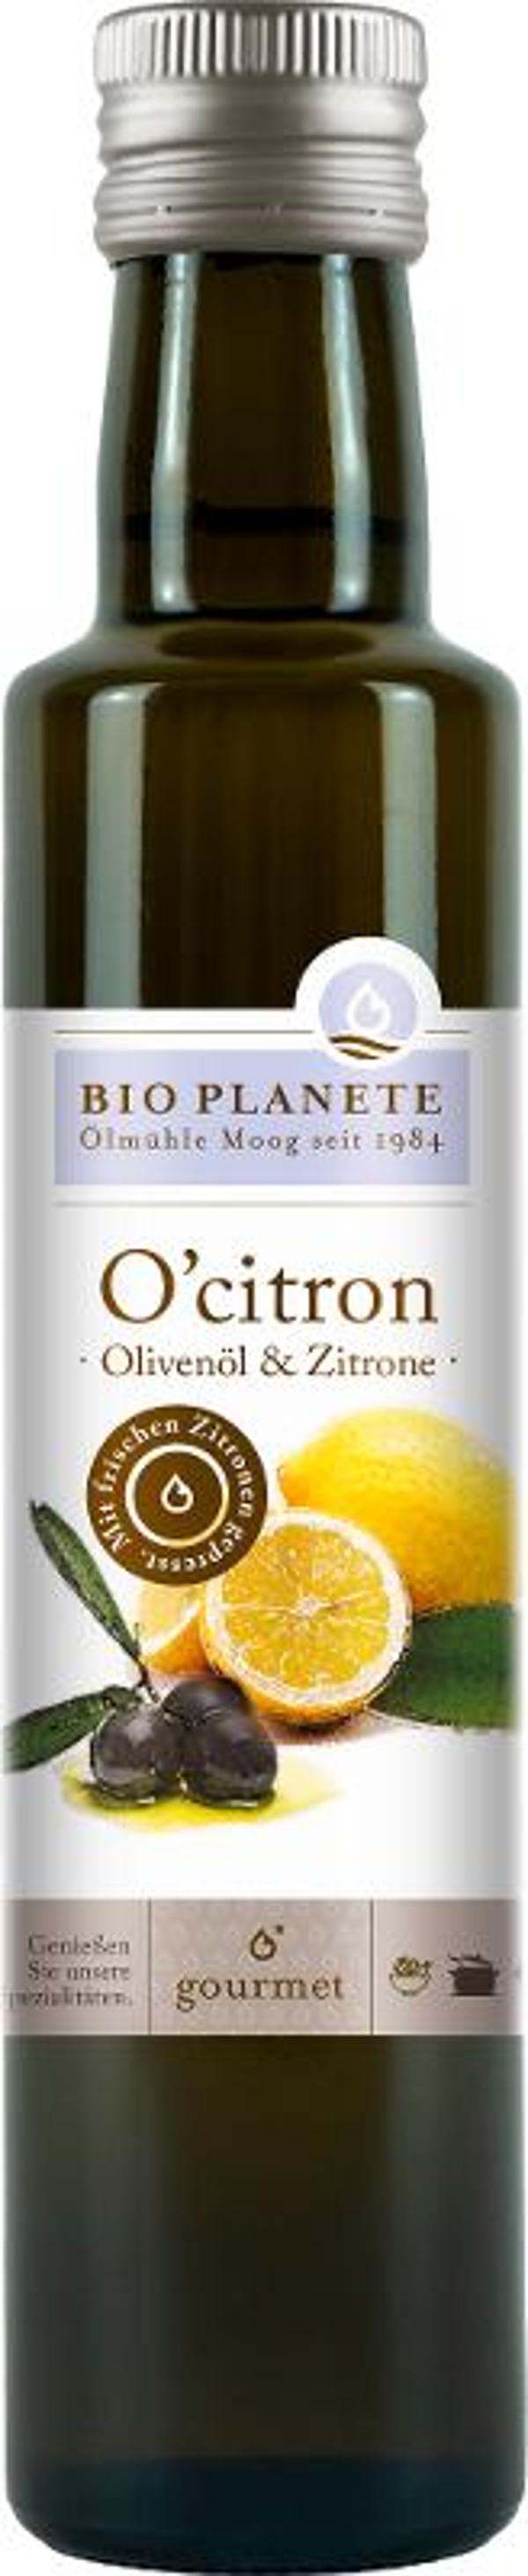 Produktfoto zu Bio Planète Olivenöl Zitrone 250ml